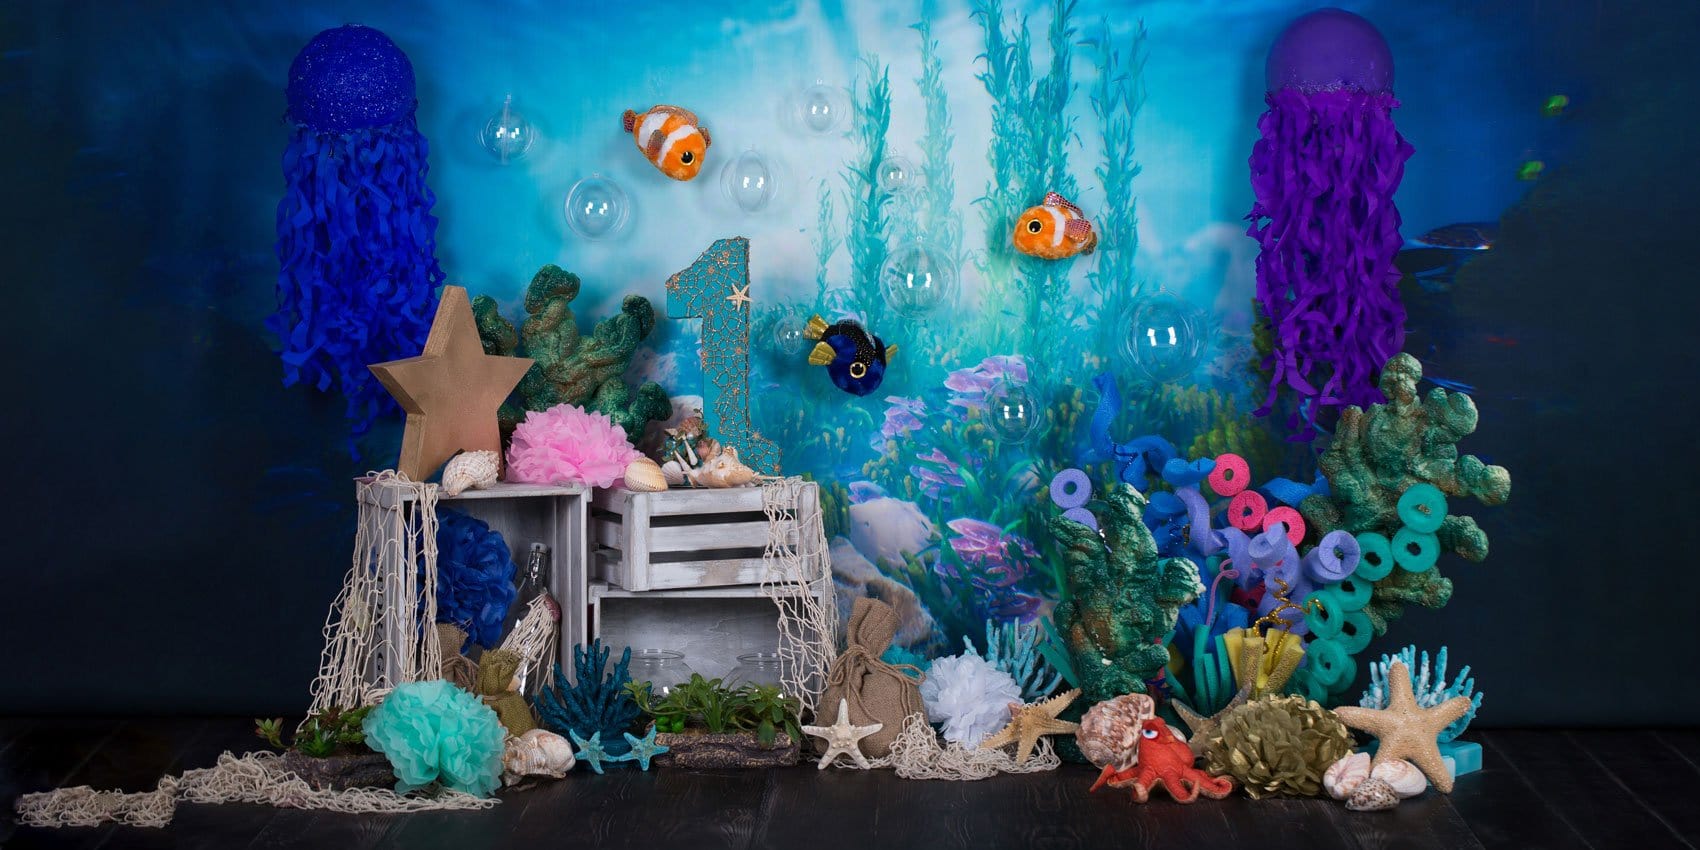 Kate mermaid under sea 1st birthday cake smash summer backdrop designed by studio gumot - Kate Backdrop